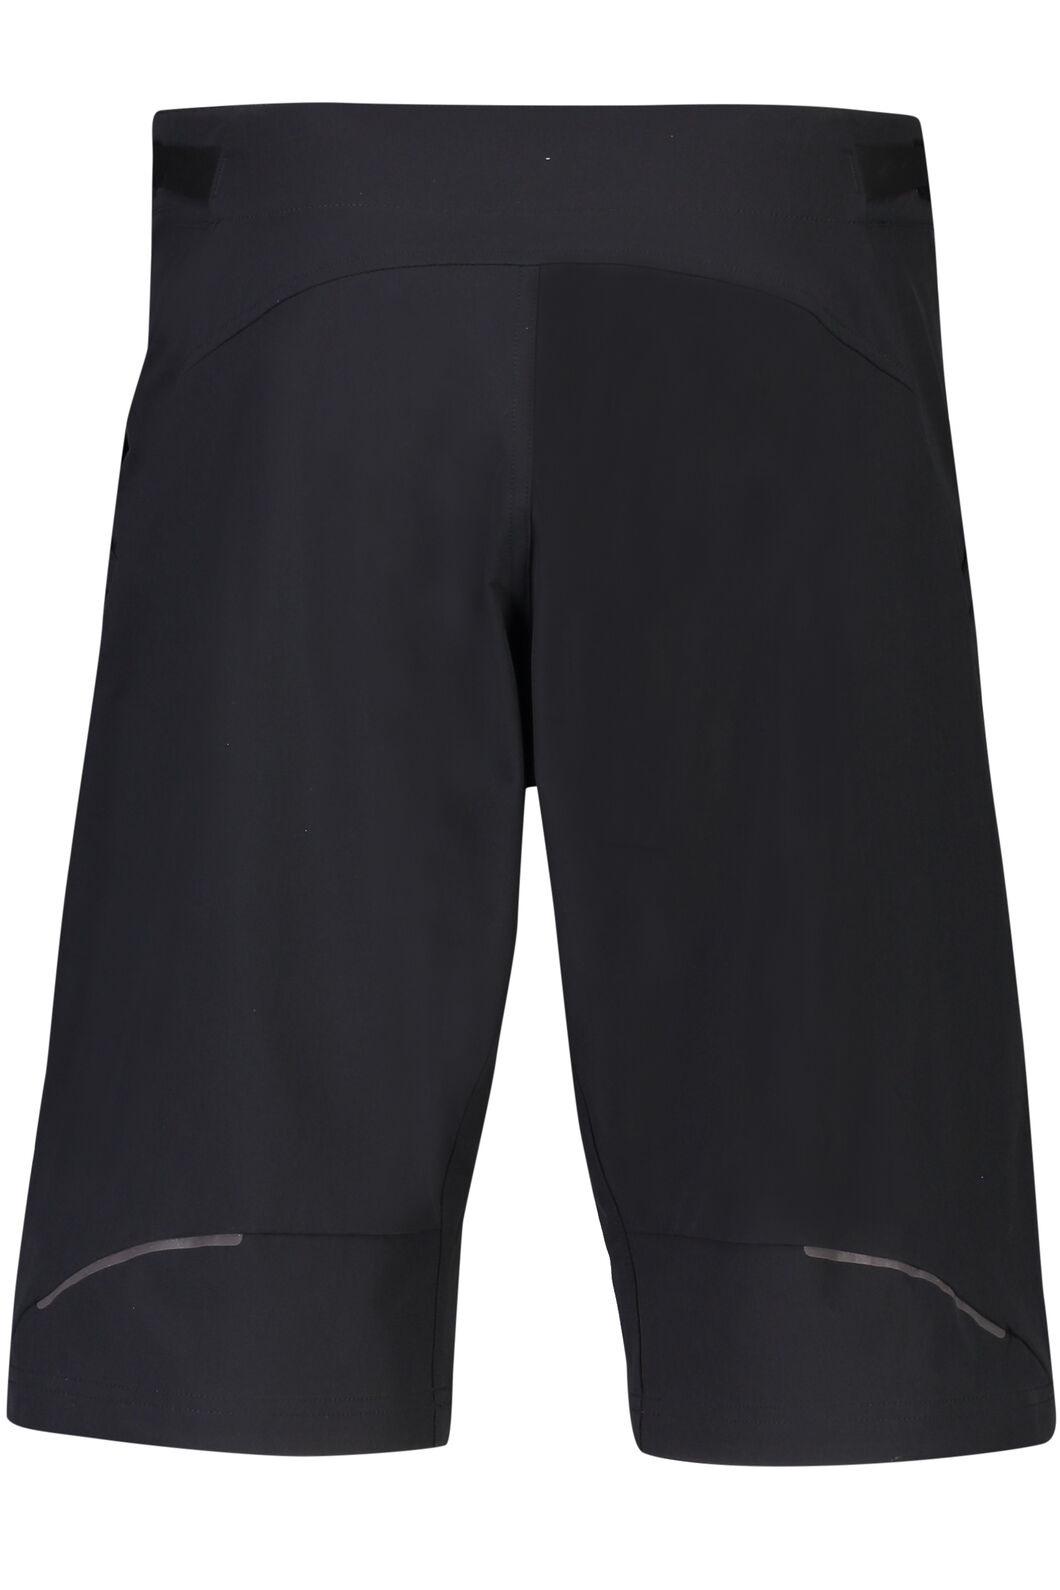 Macpac Stretch Pertex Equilibrium® Mountain Bike Shorts - Men's | Macpac